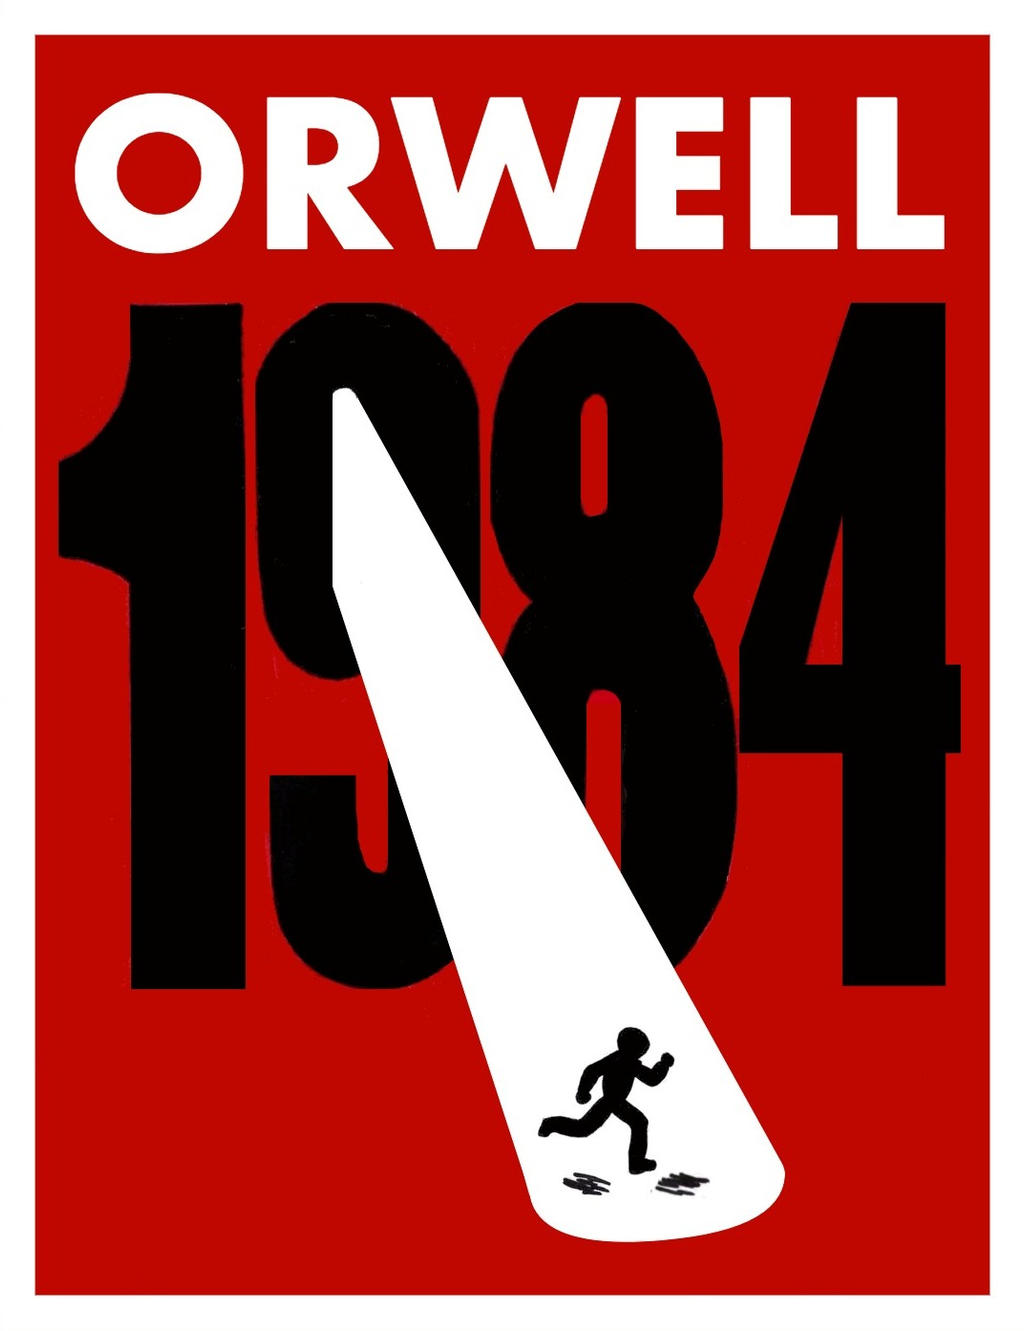 1984 Book Cover.